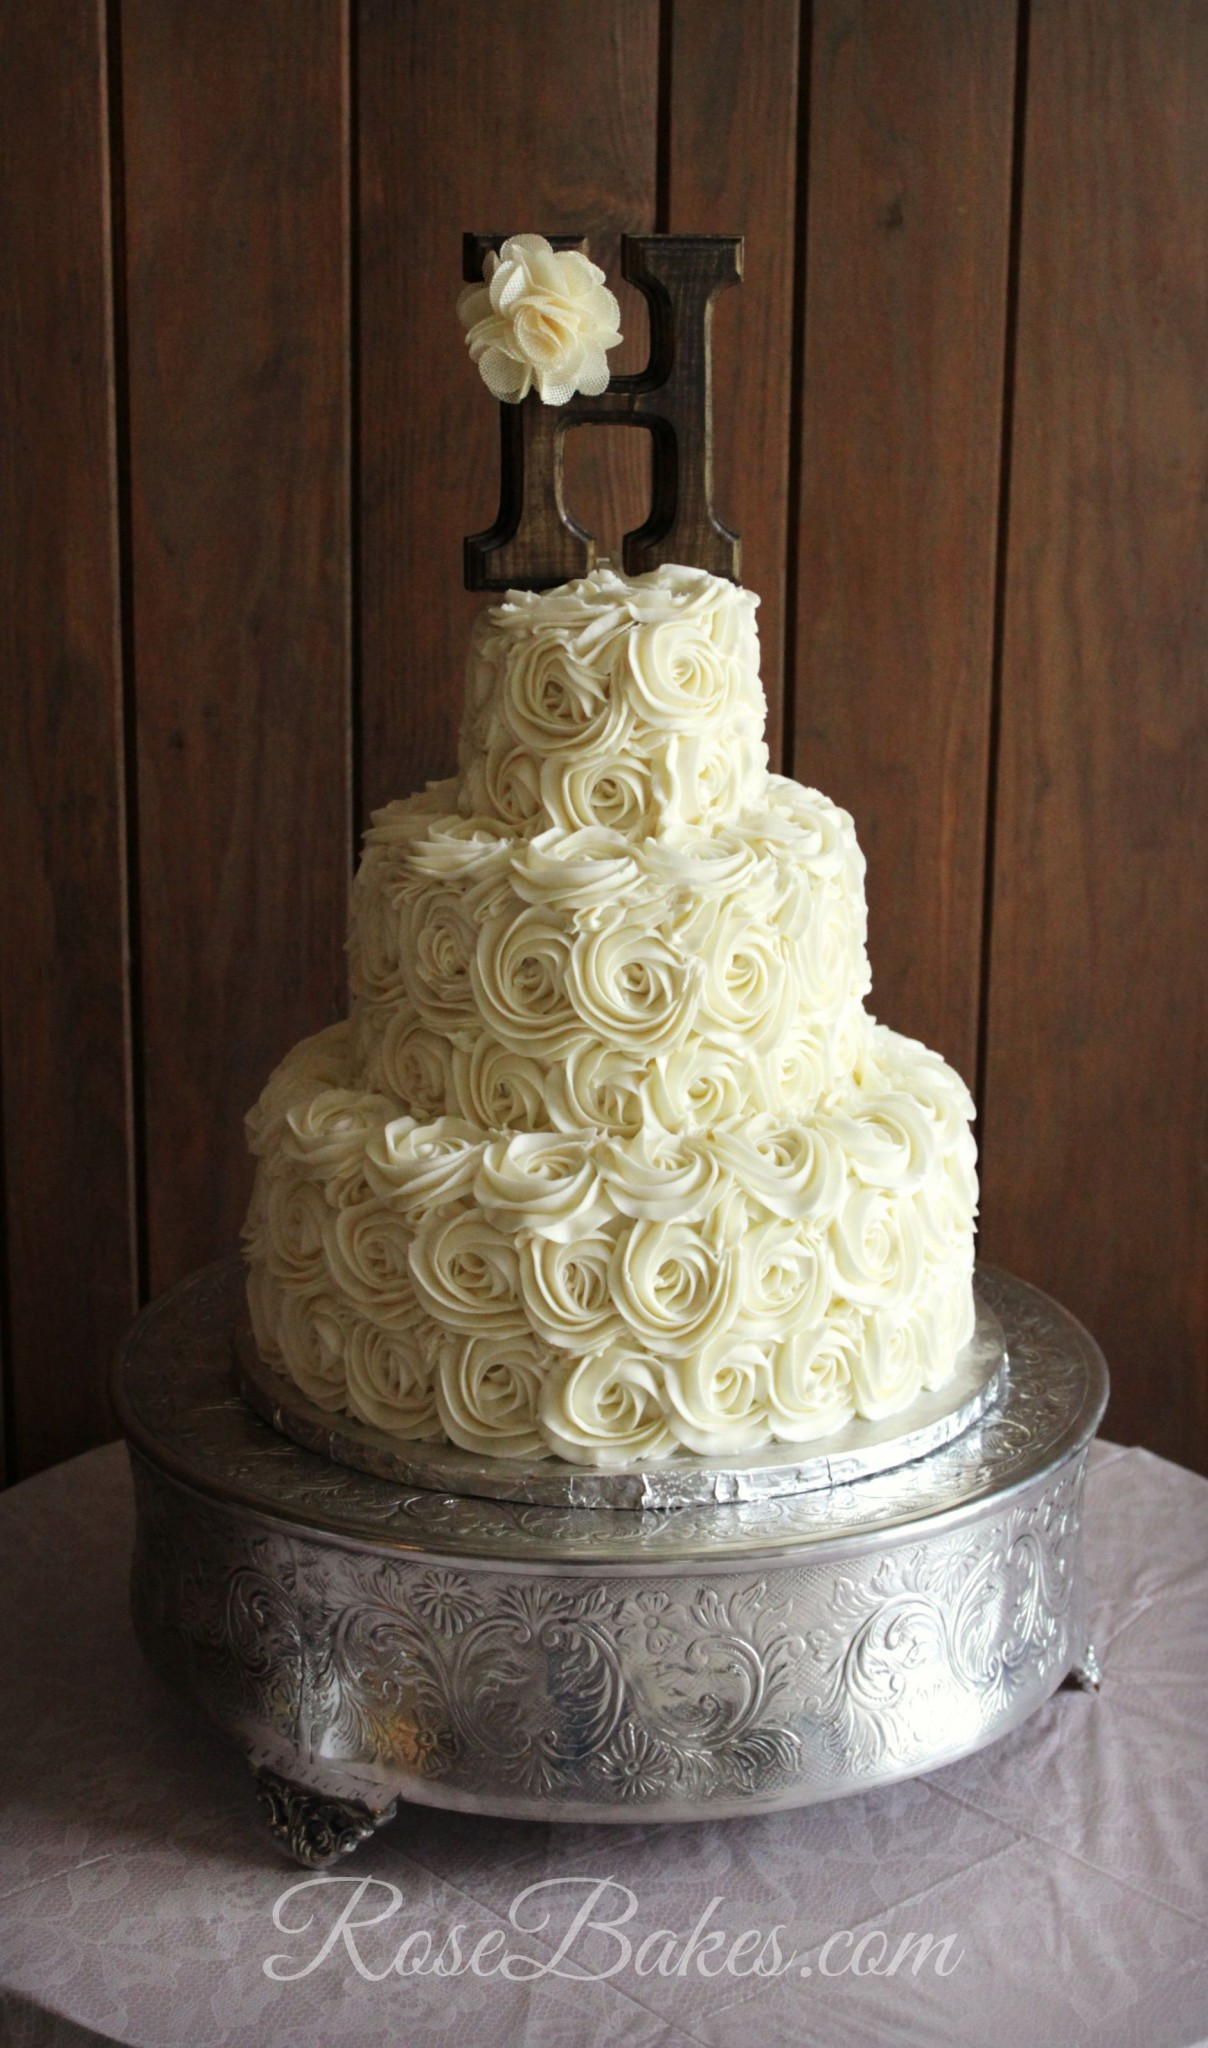 Rose Wedding Cakes
 Rustic Buttercream Roses Wedding Cake Rose Bakes